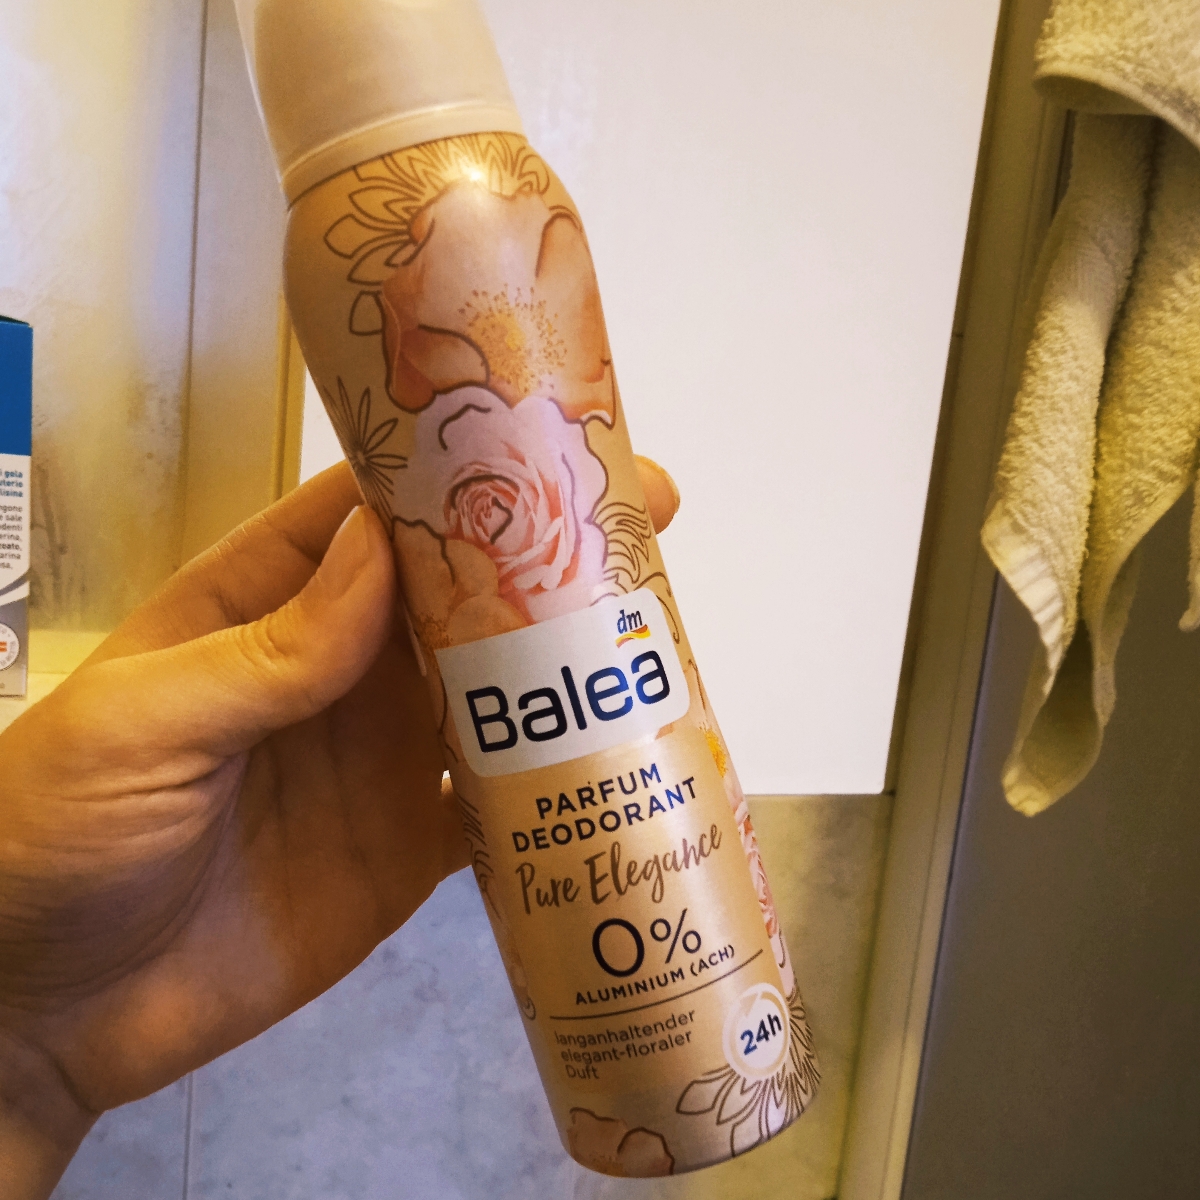 Balea parfum deodorant pure elegance Review | abillion